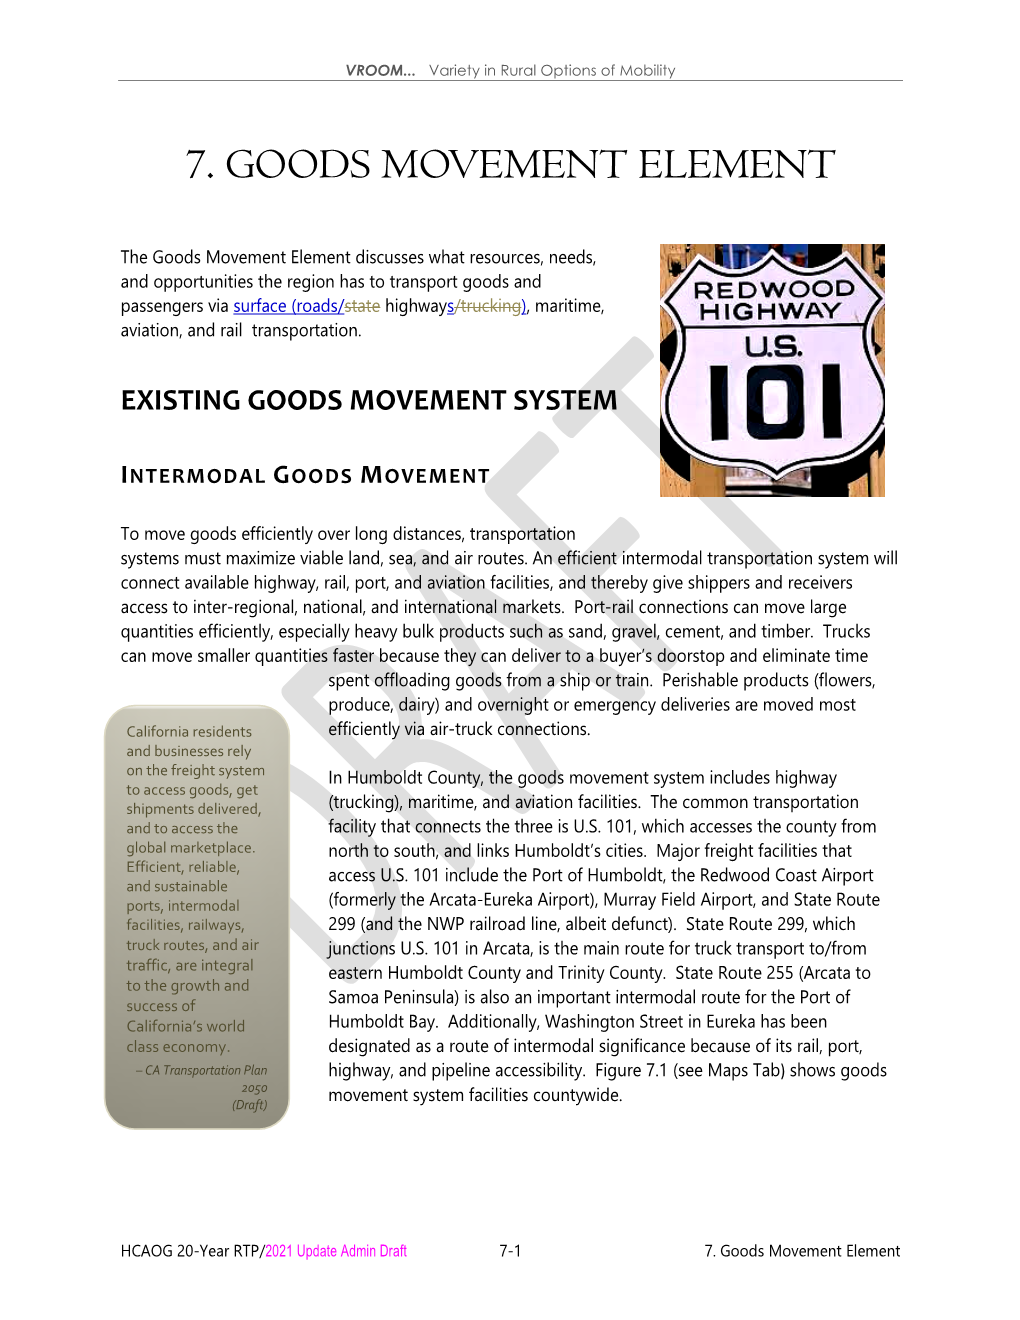 7. Goods Movement Element